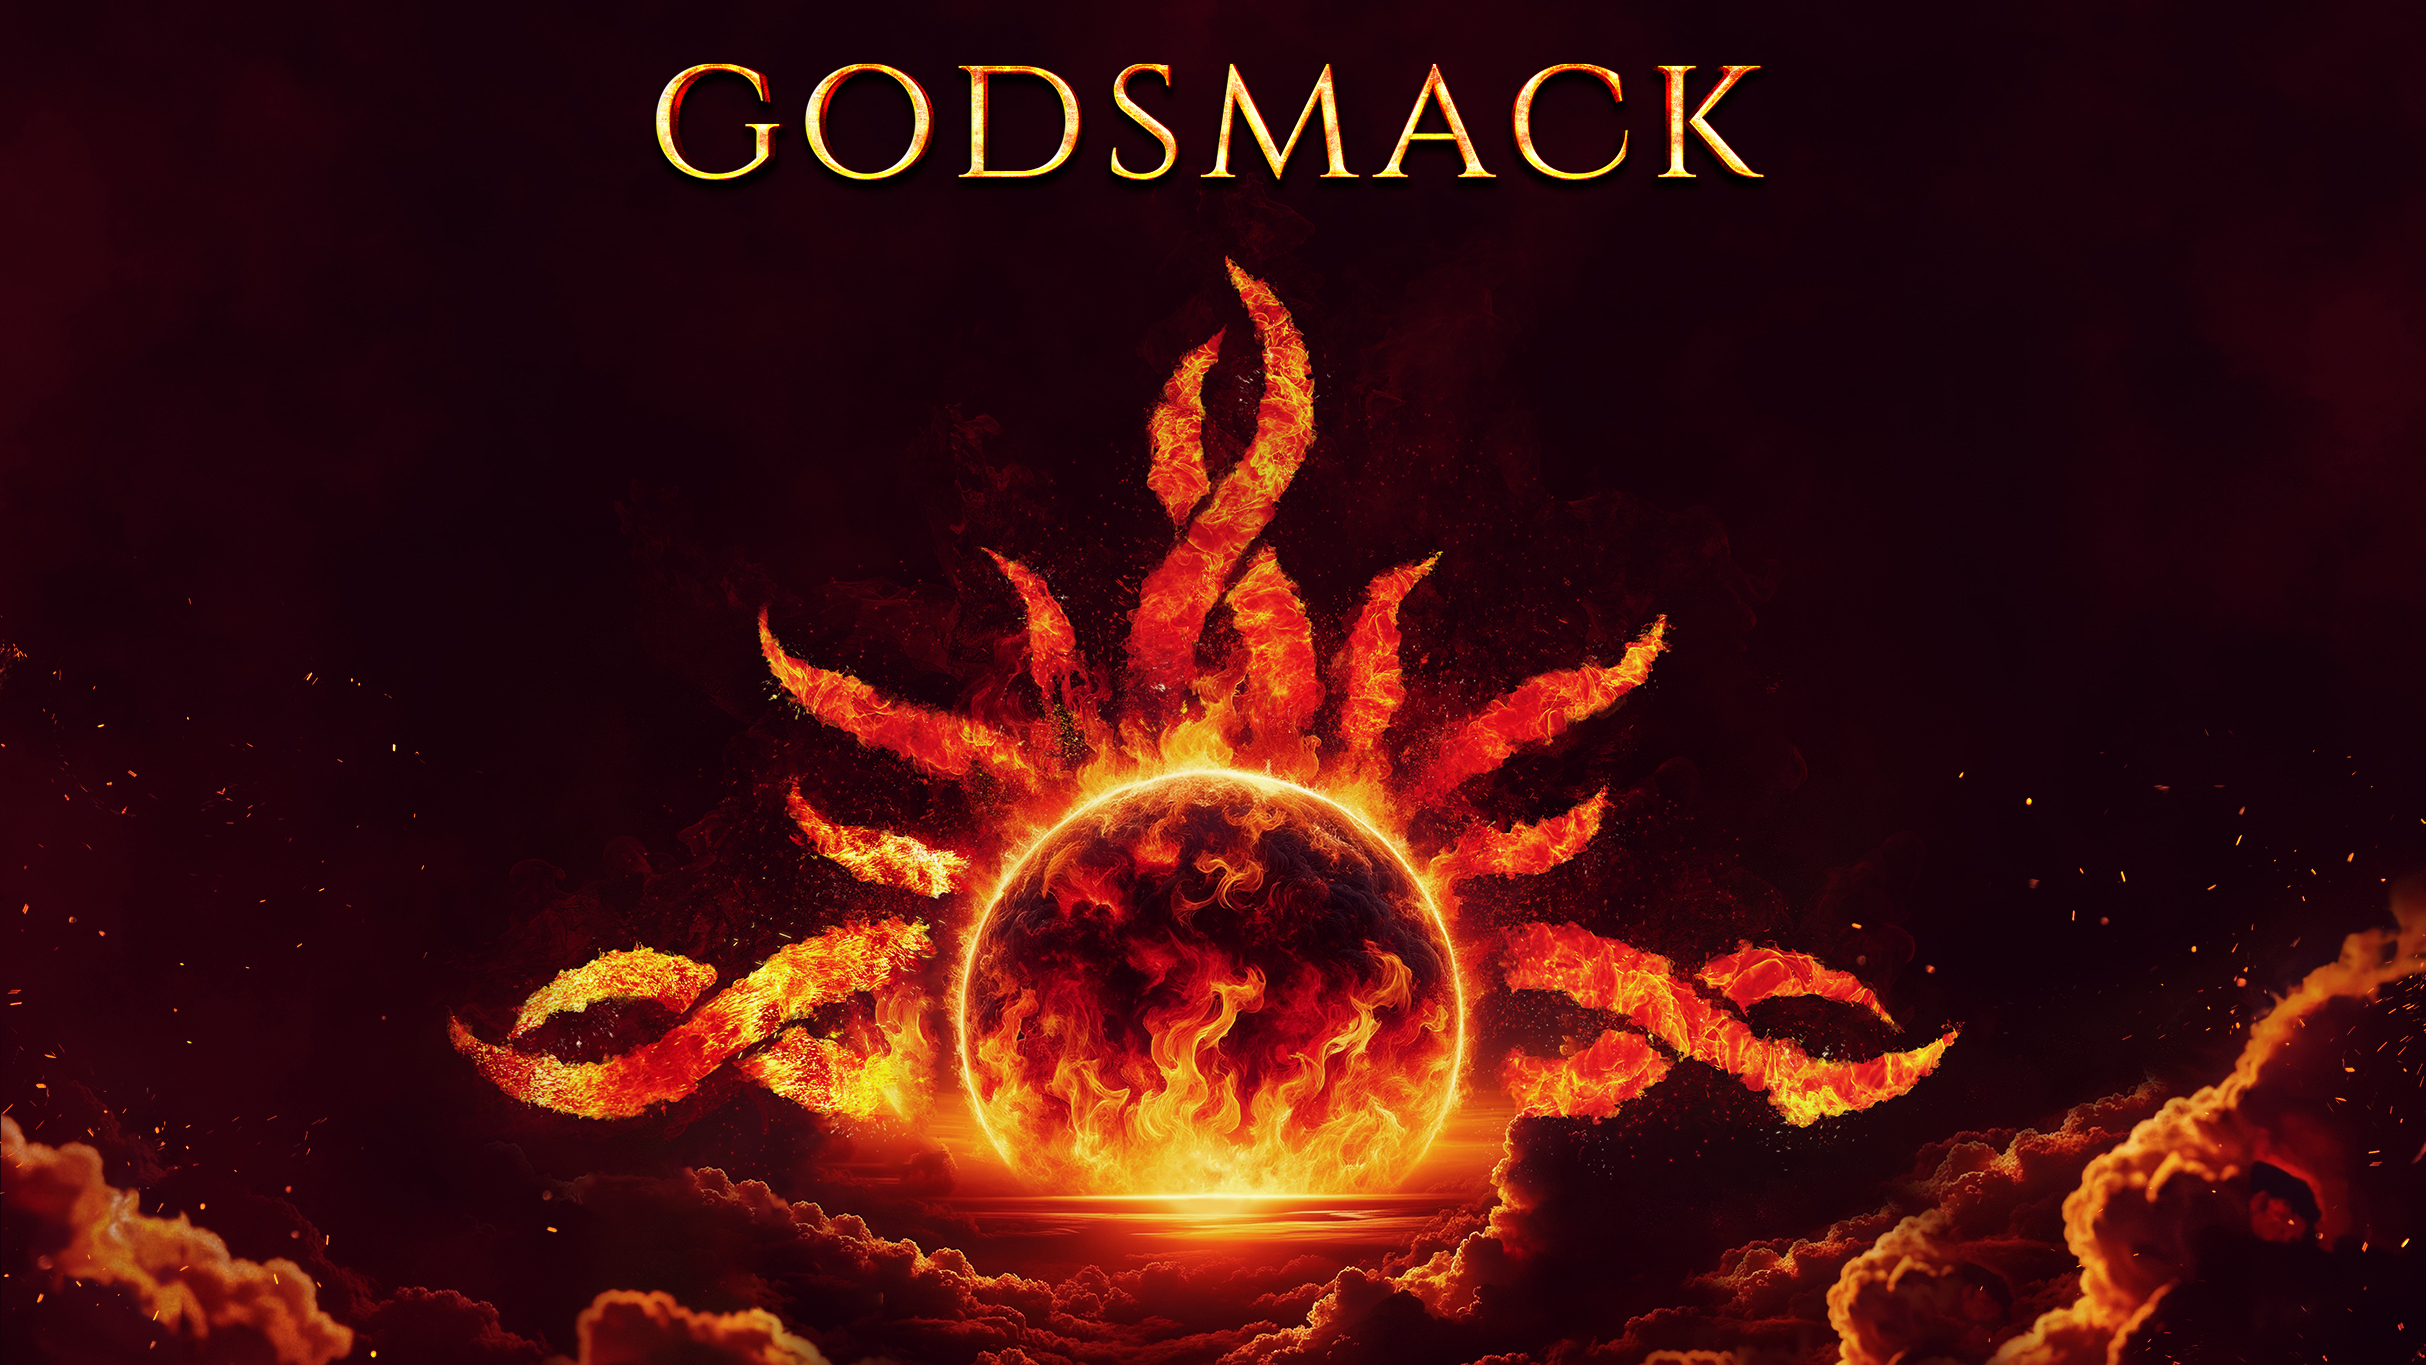 105.7 The Point Presents Godsmack